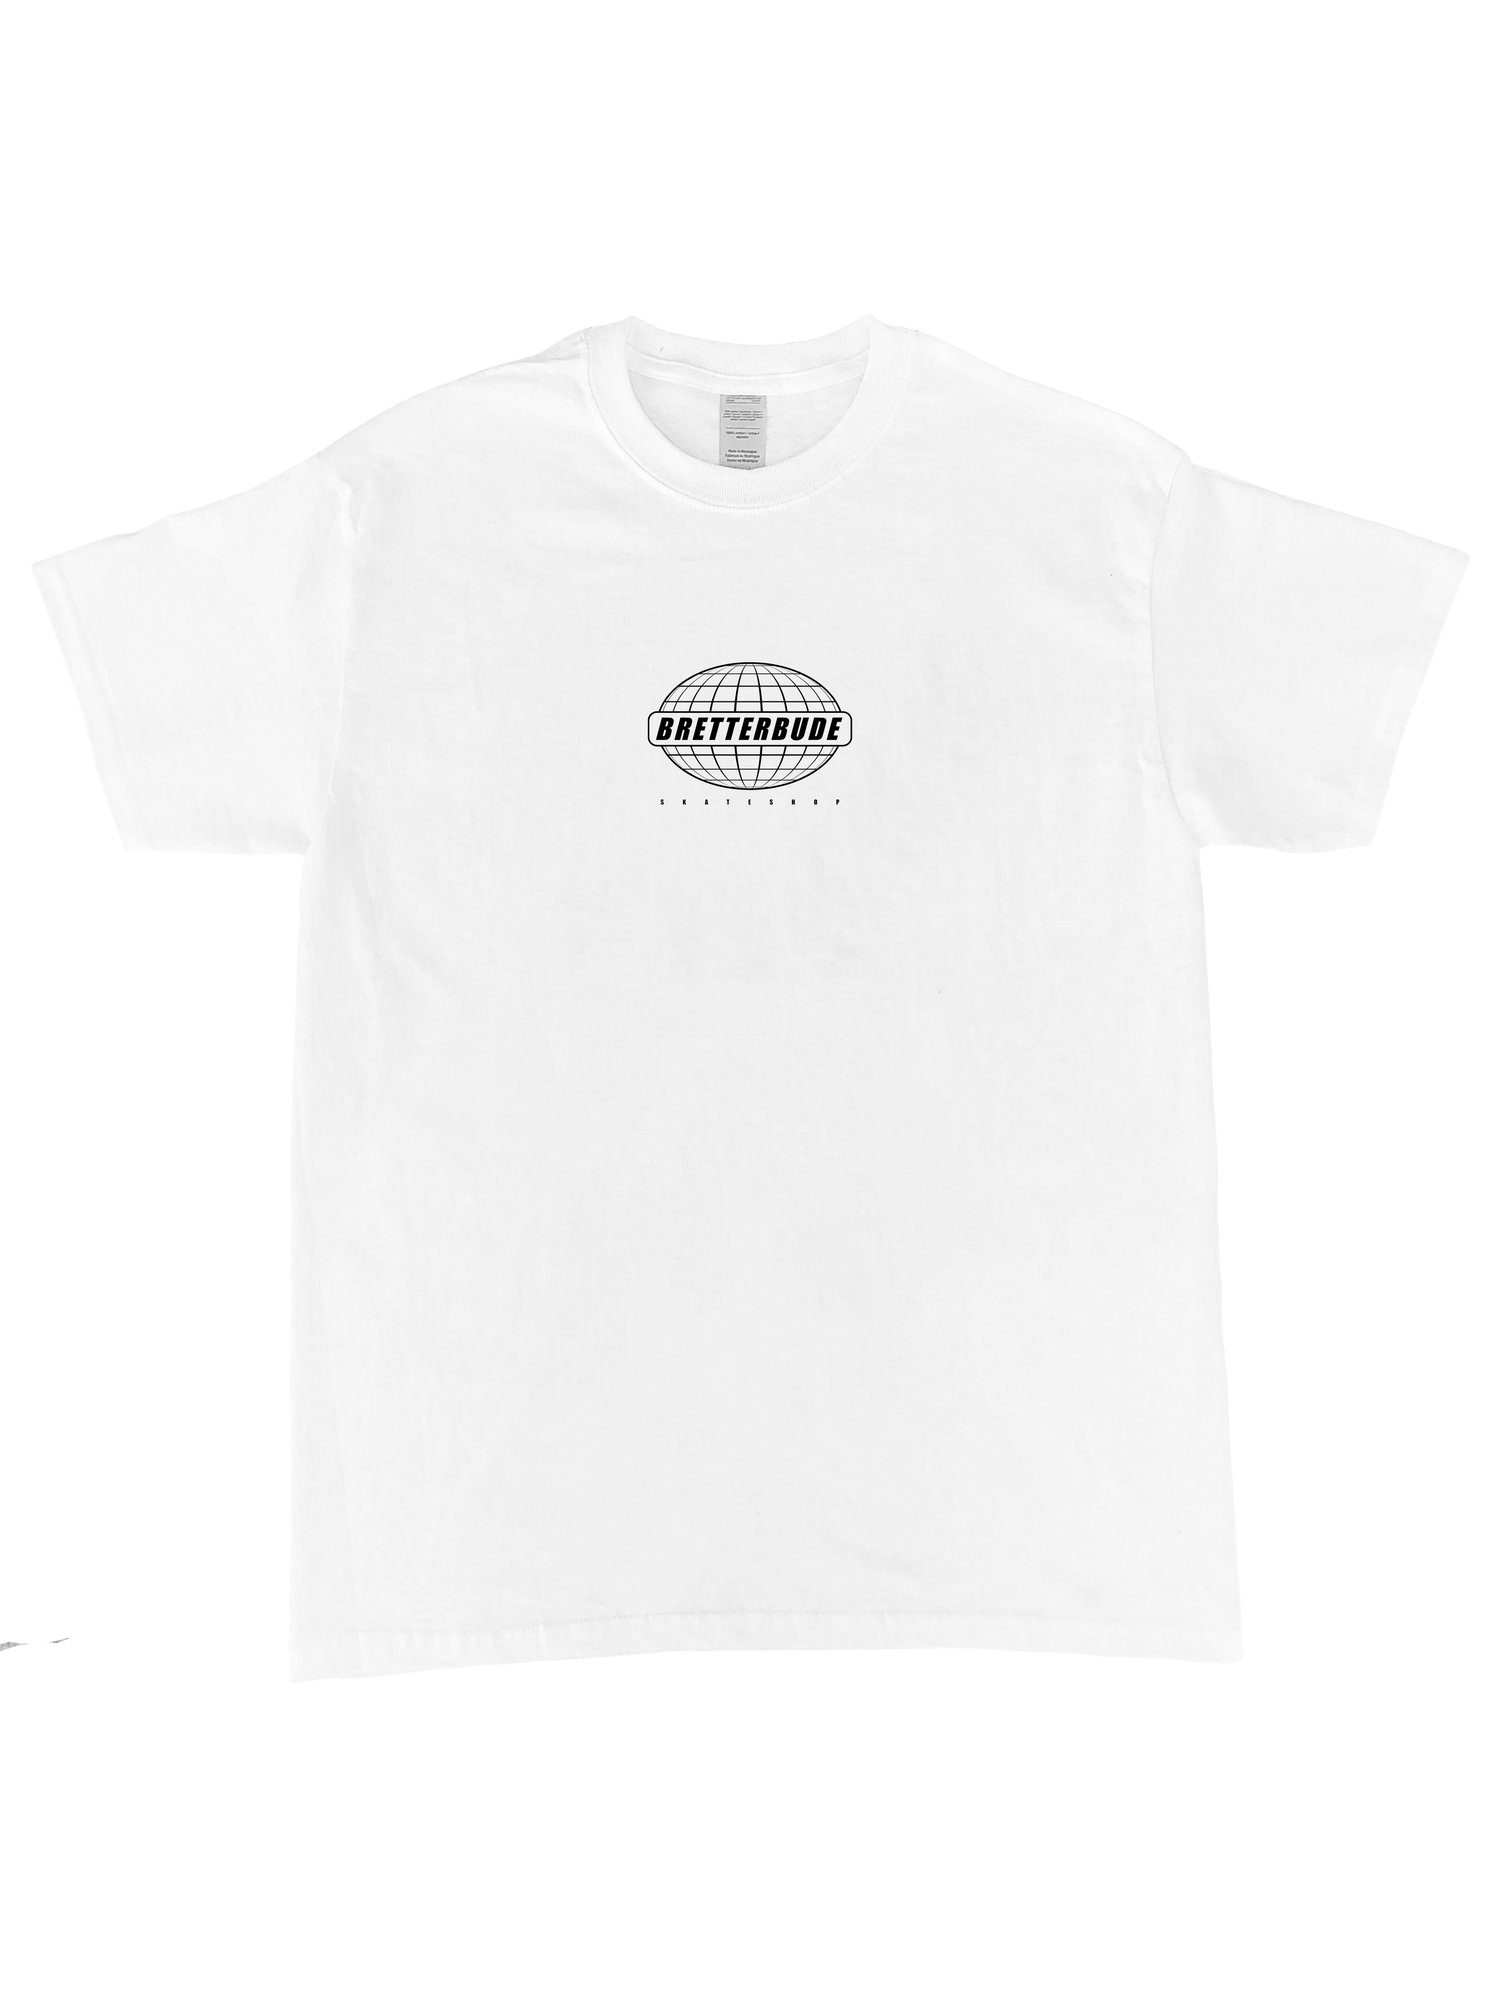 Image of Bretterbude Globus T-Shirt (White)